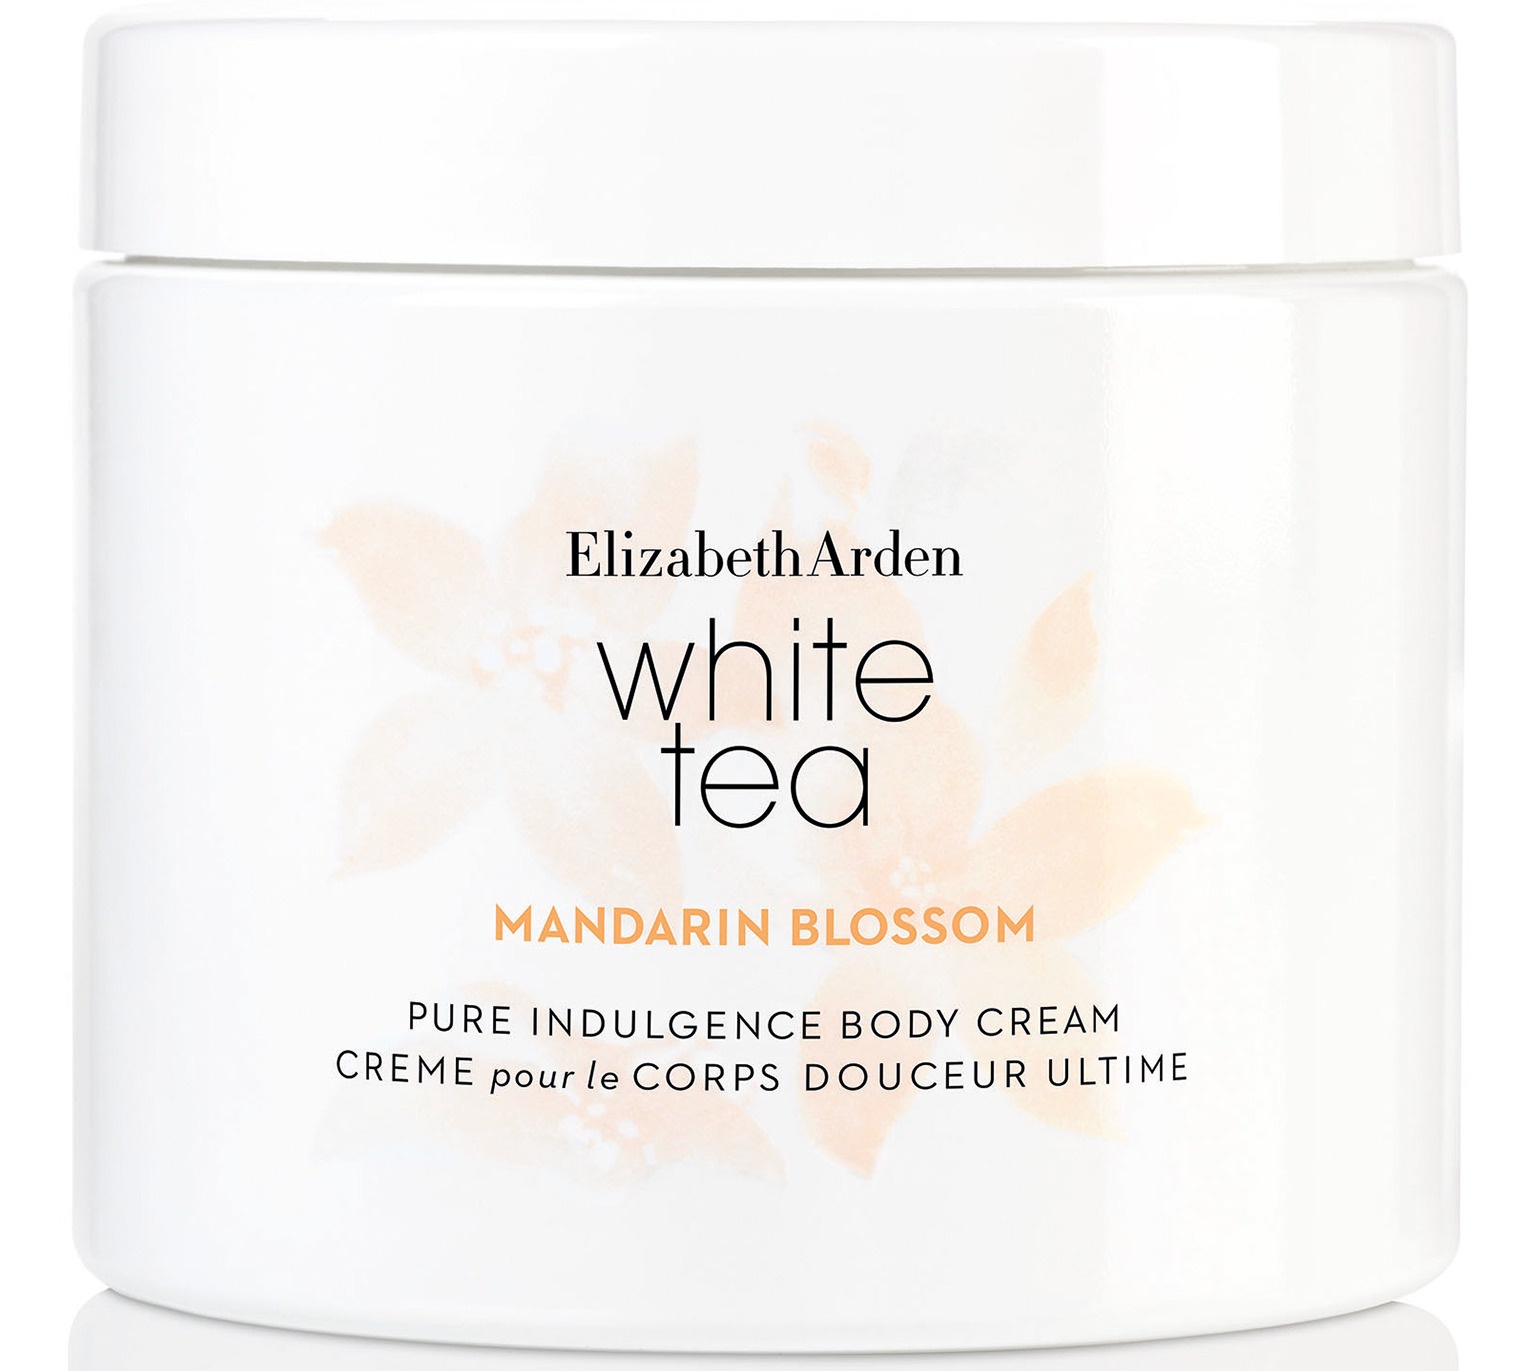 Elizabeth Arden White Tea Mandarin Blossom Pure Indulgence Body Cream